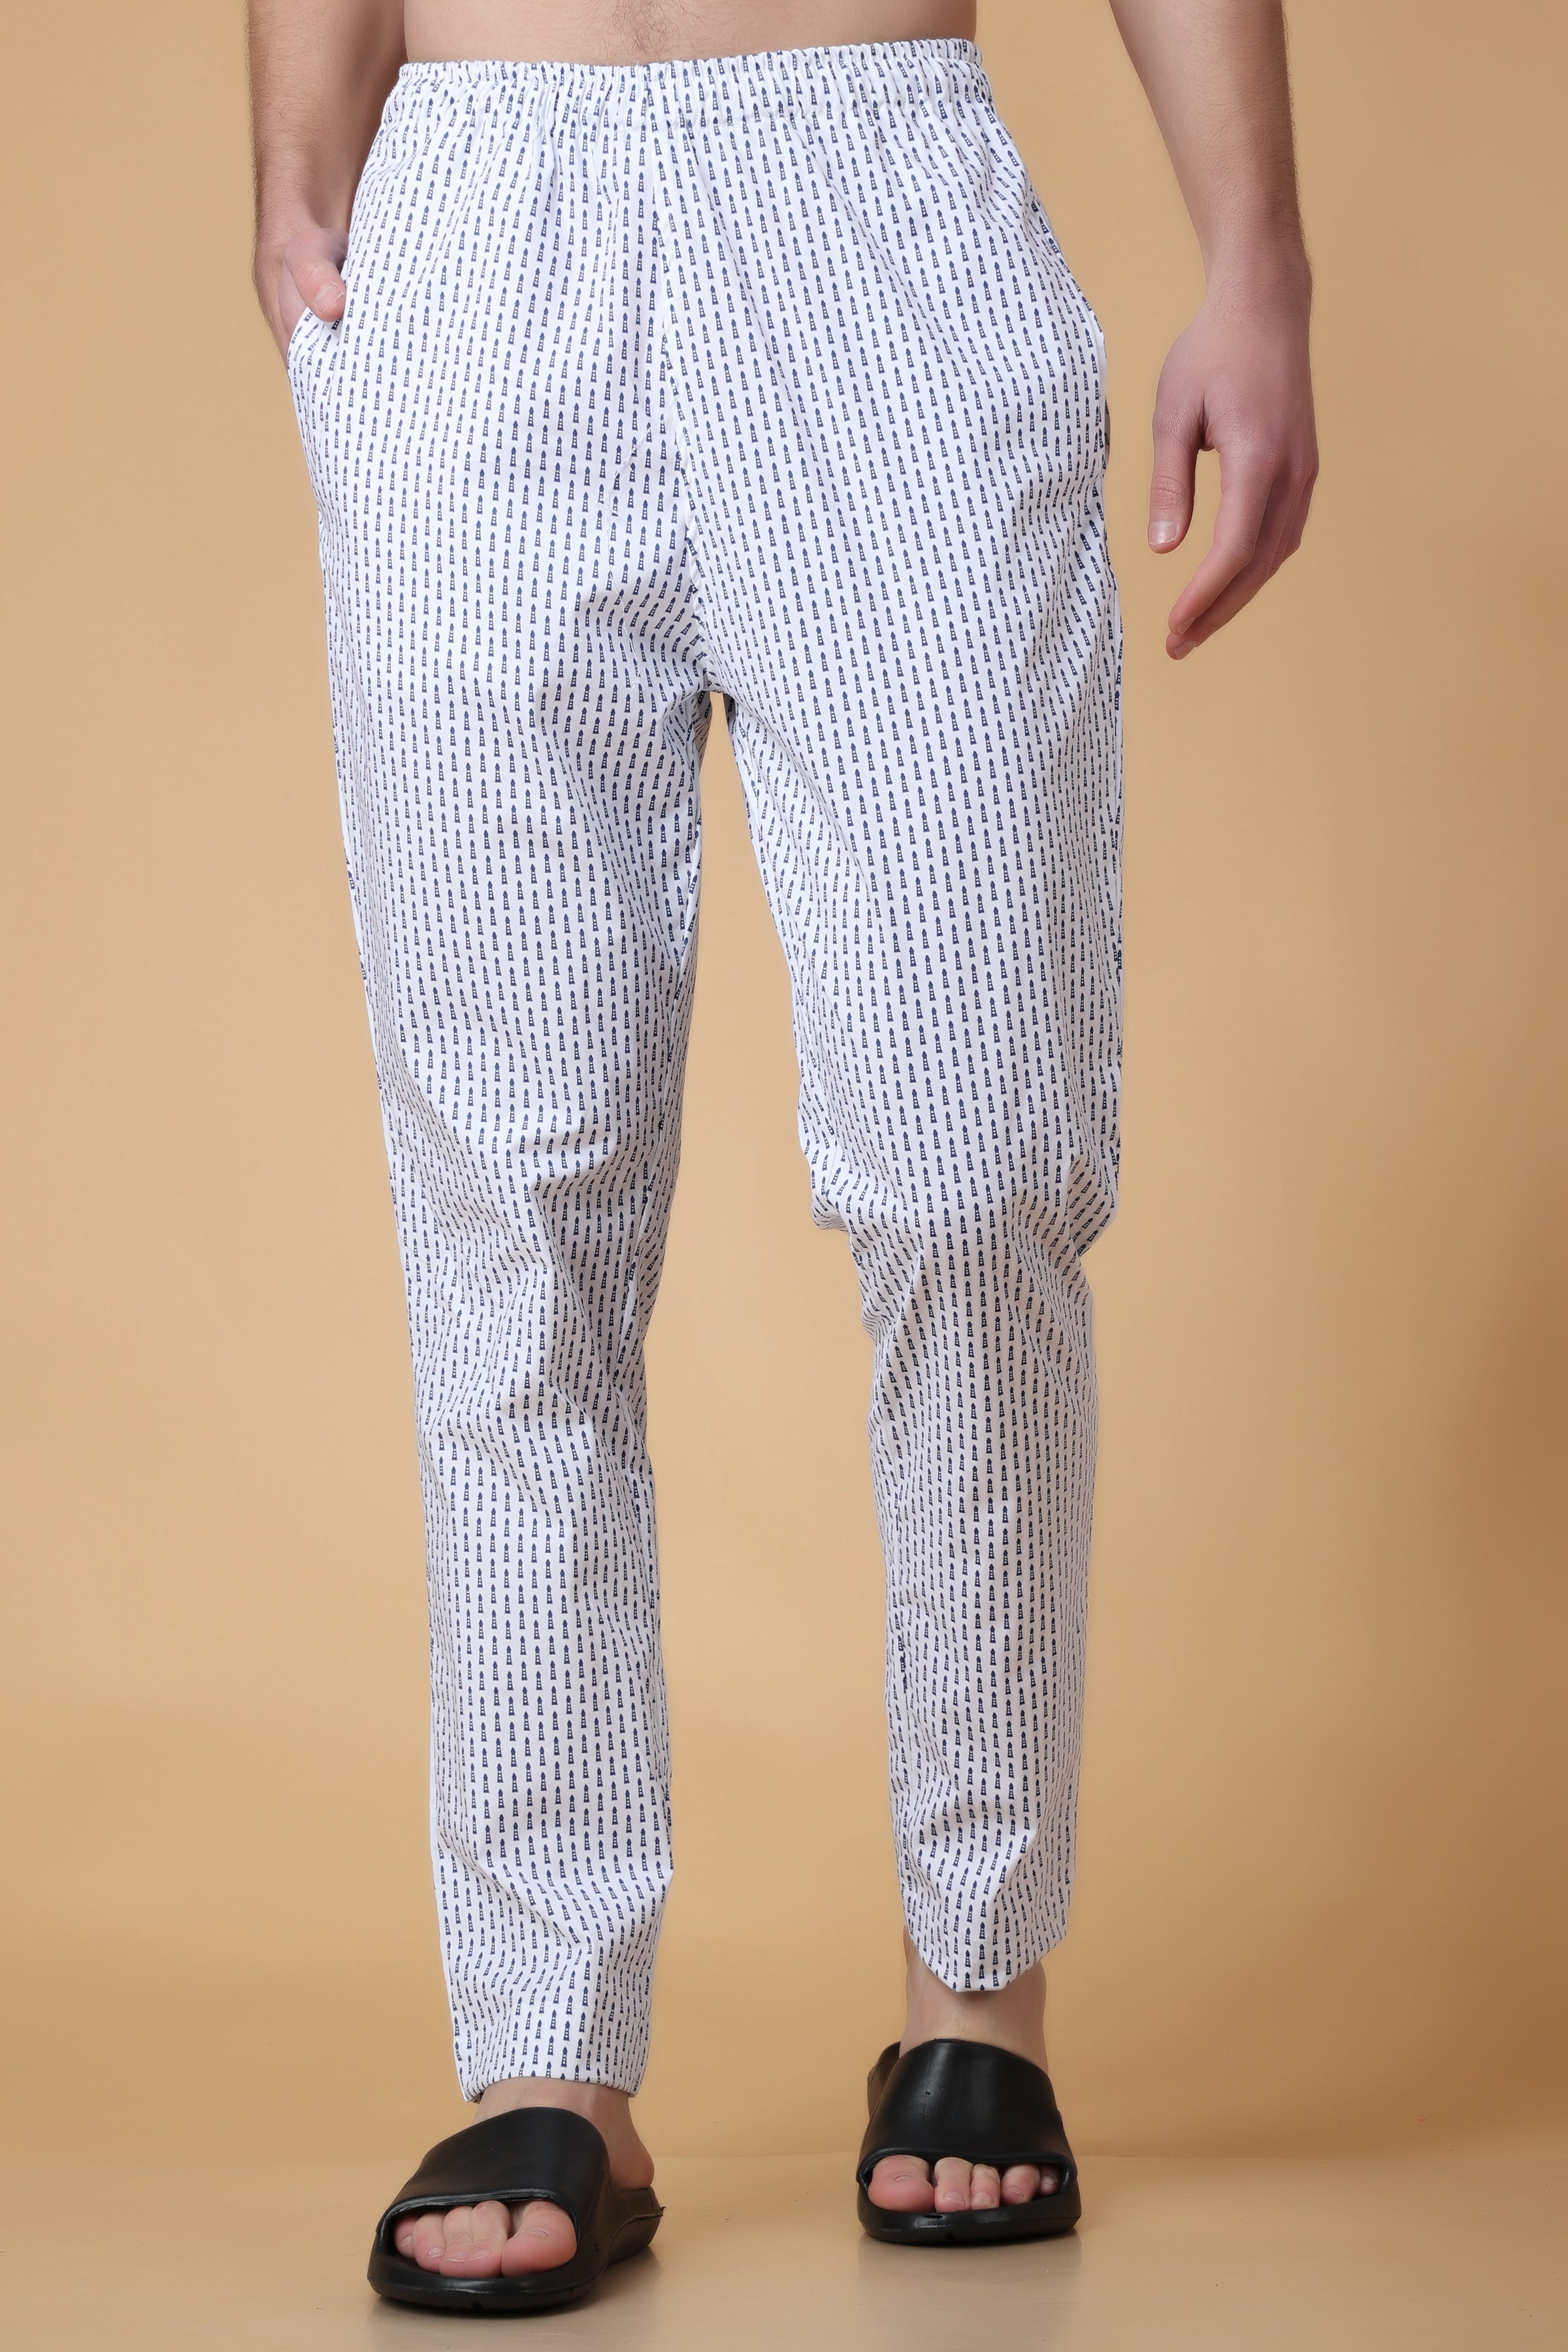 Cotton Tank & Pant Pajama Set - Just Love Fashion